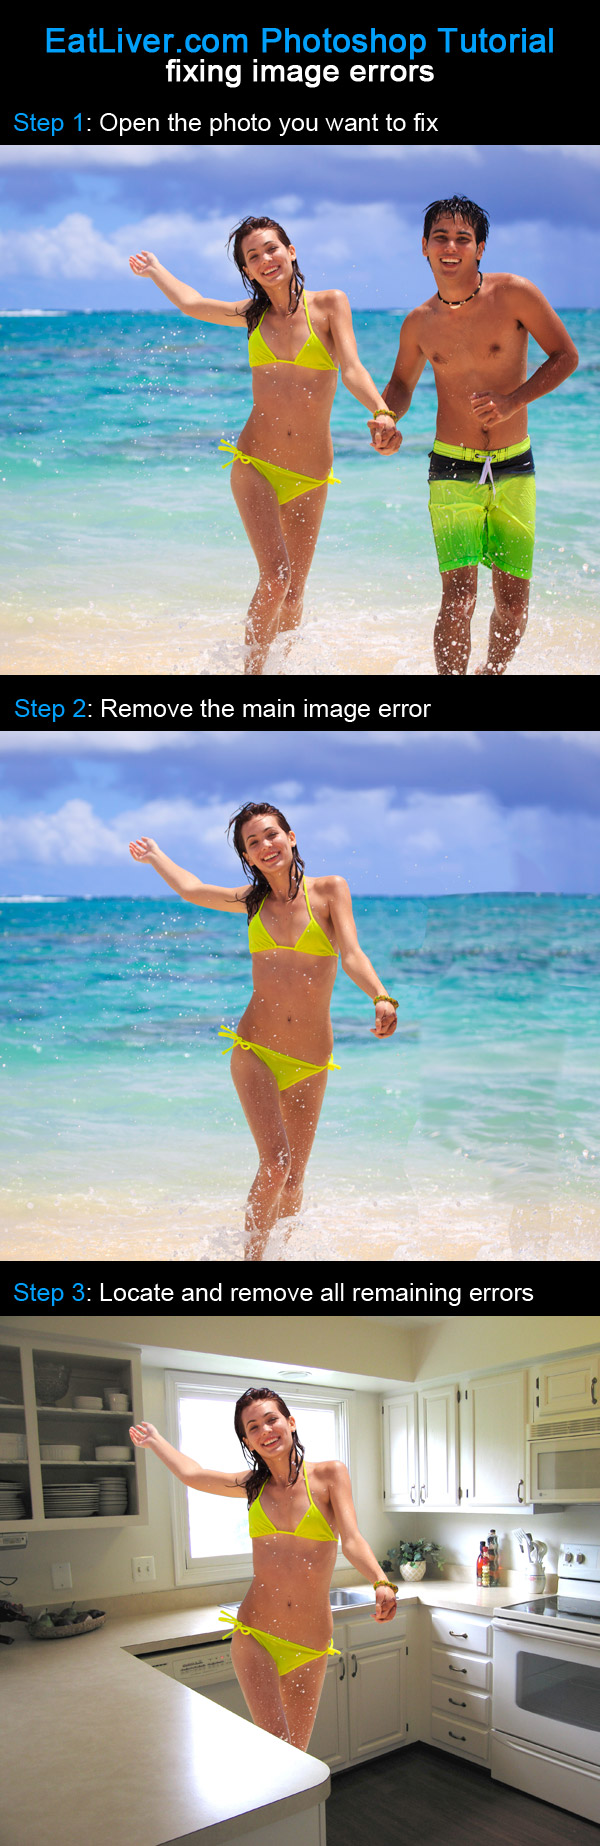 photoshop_tutorial-fixing_image_errors.jpg